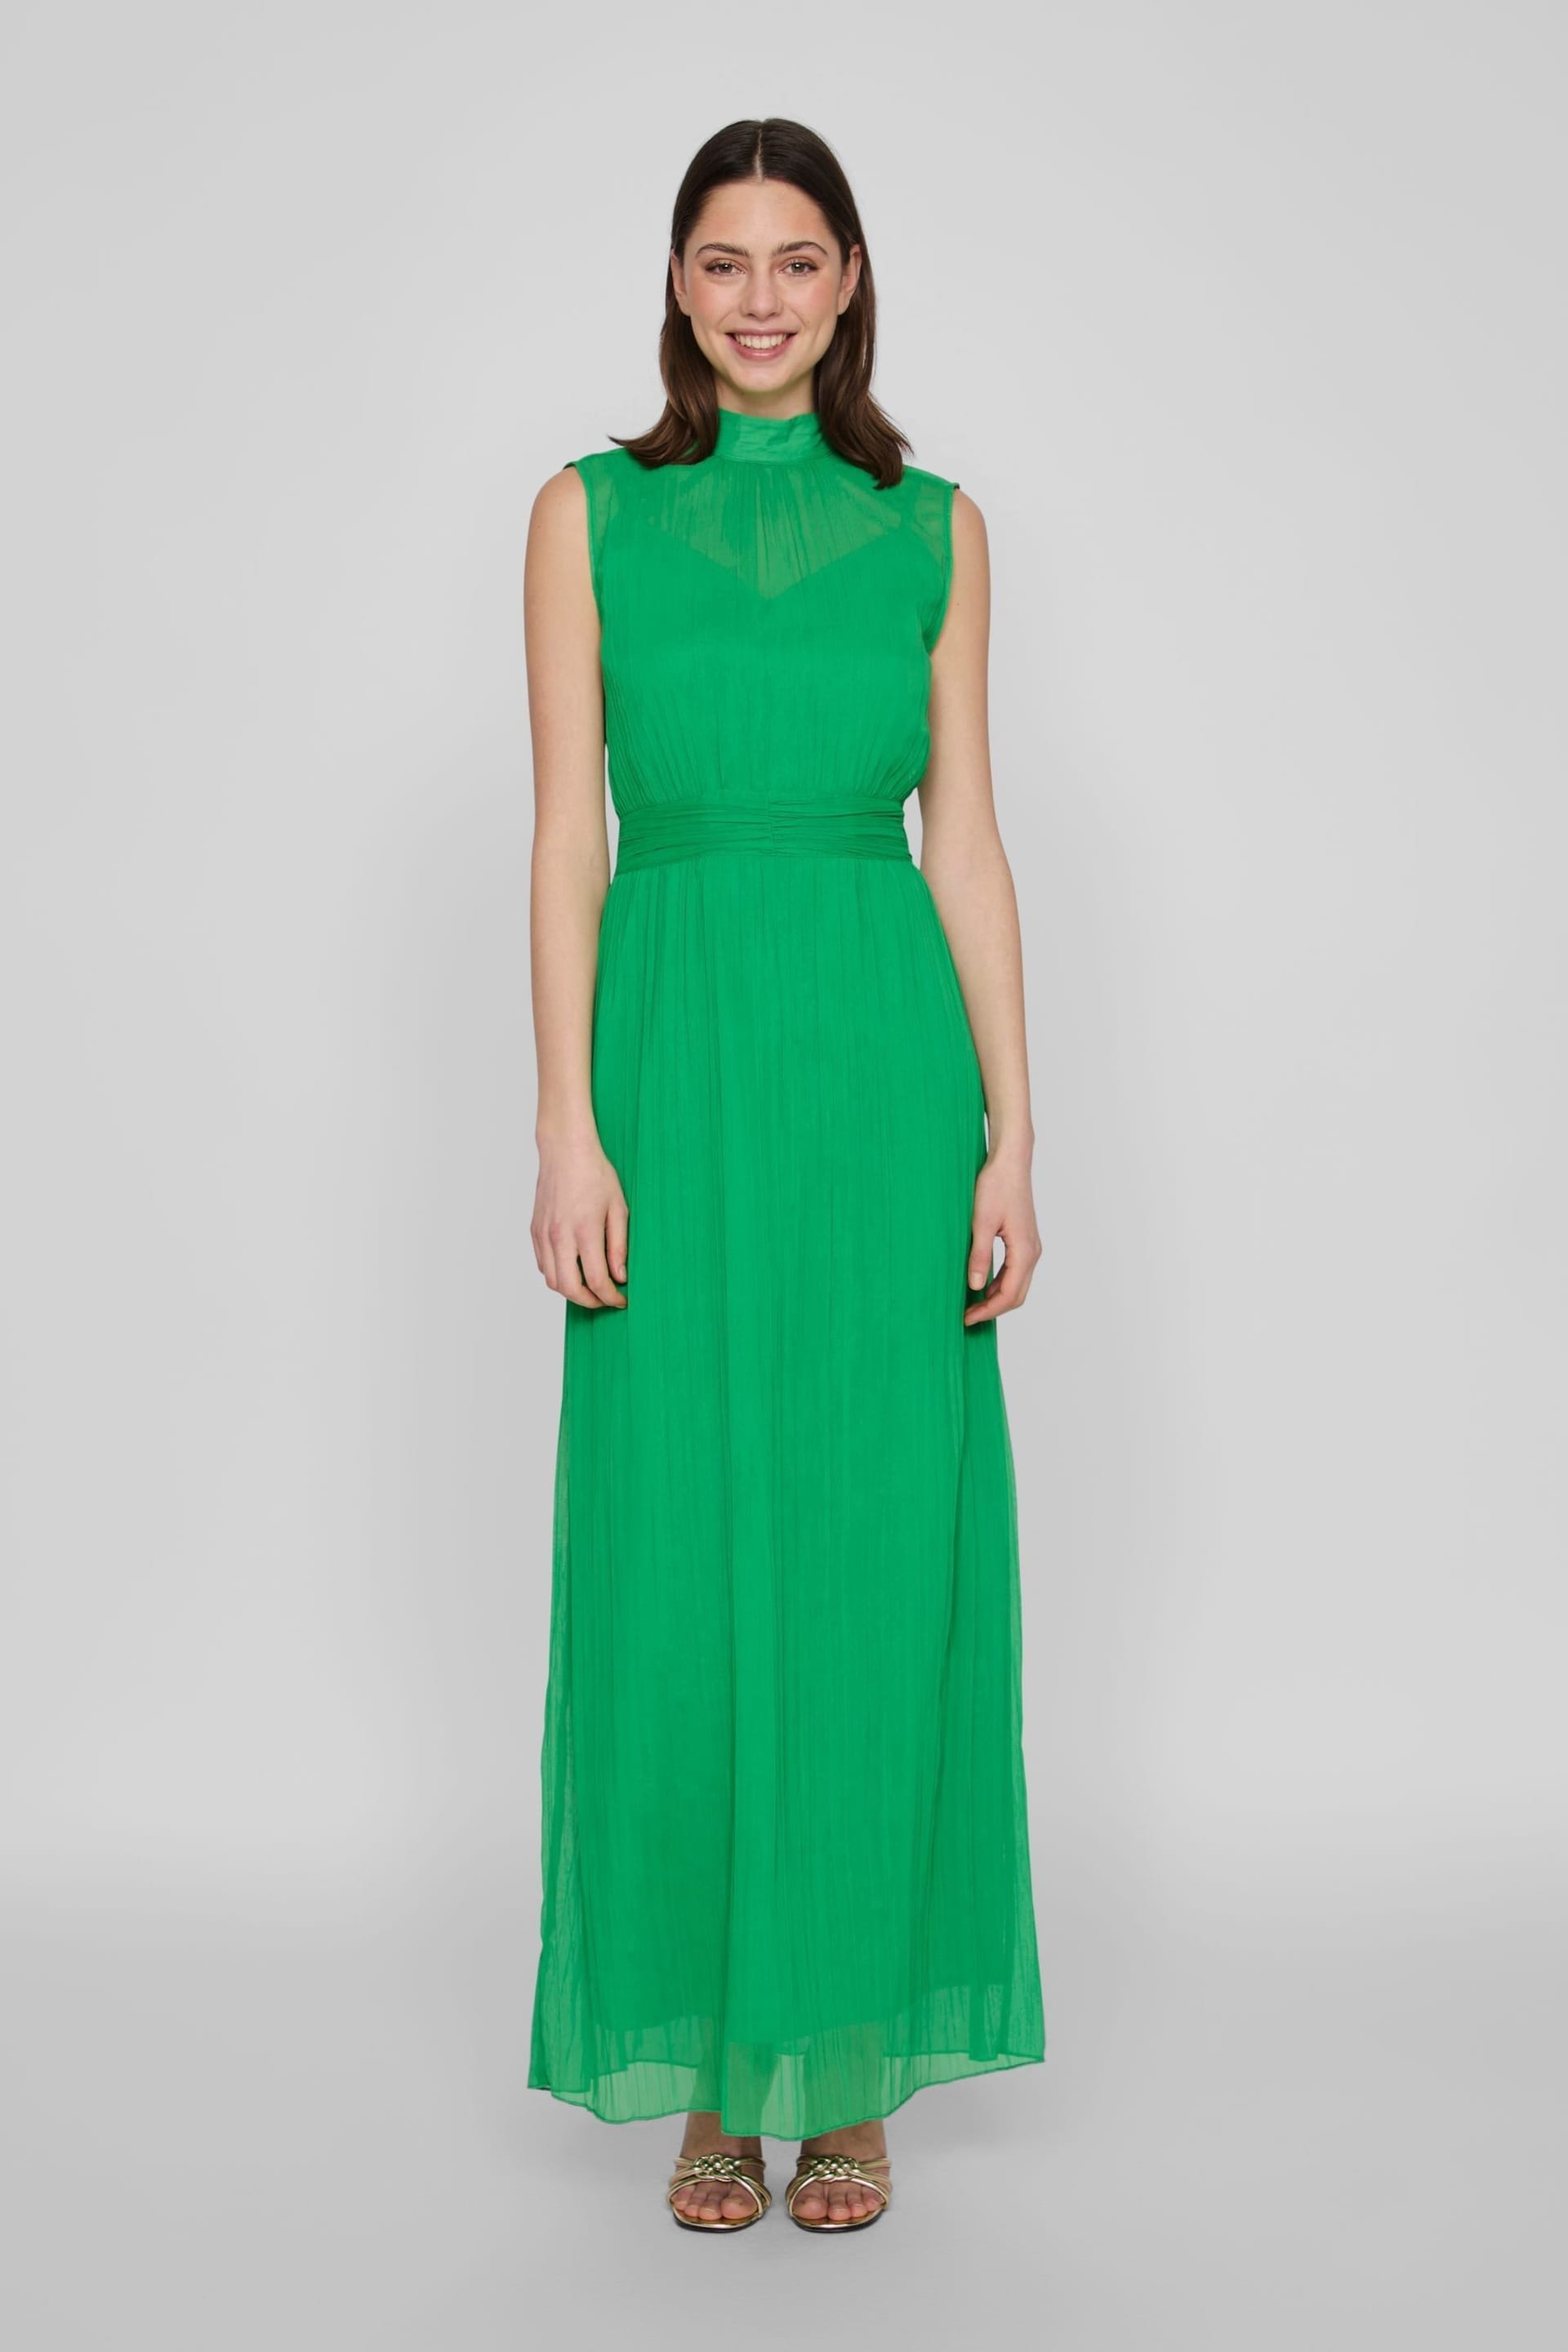 VILA Green Maxi Occasion Sleeveless Maxi Dress - Image 2 of 8